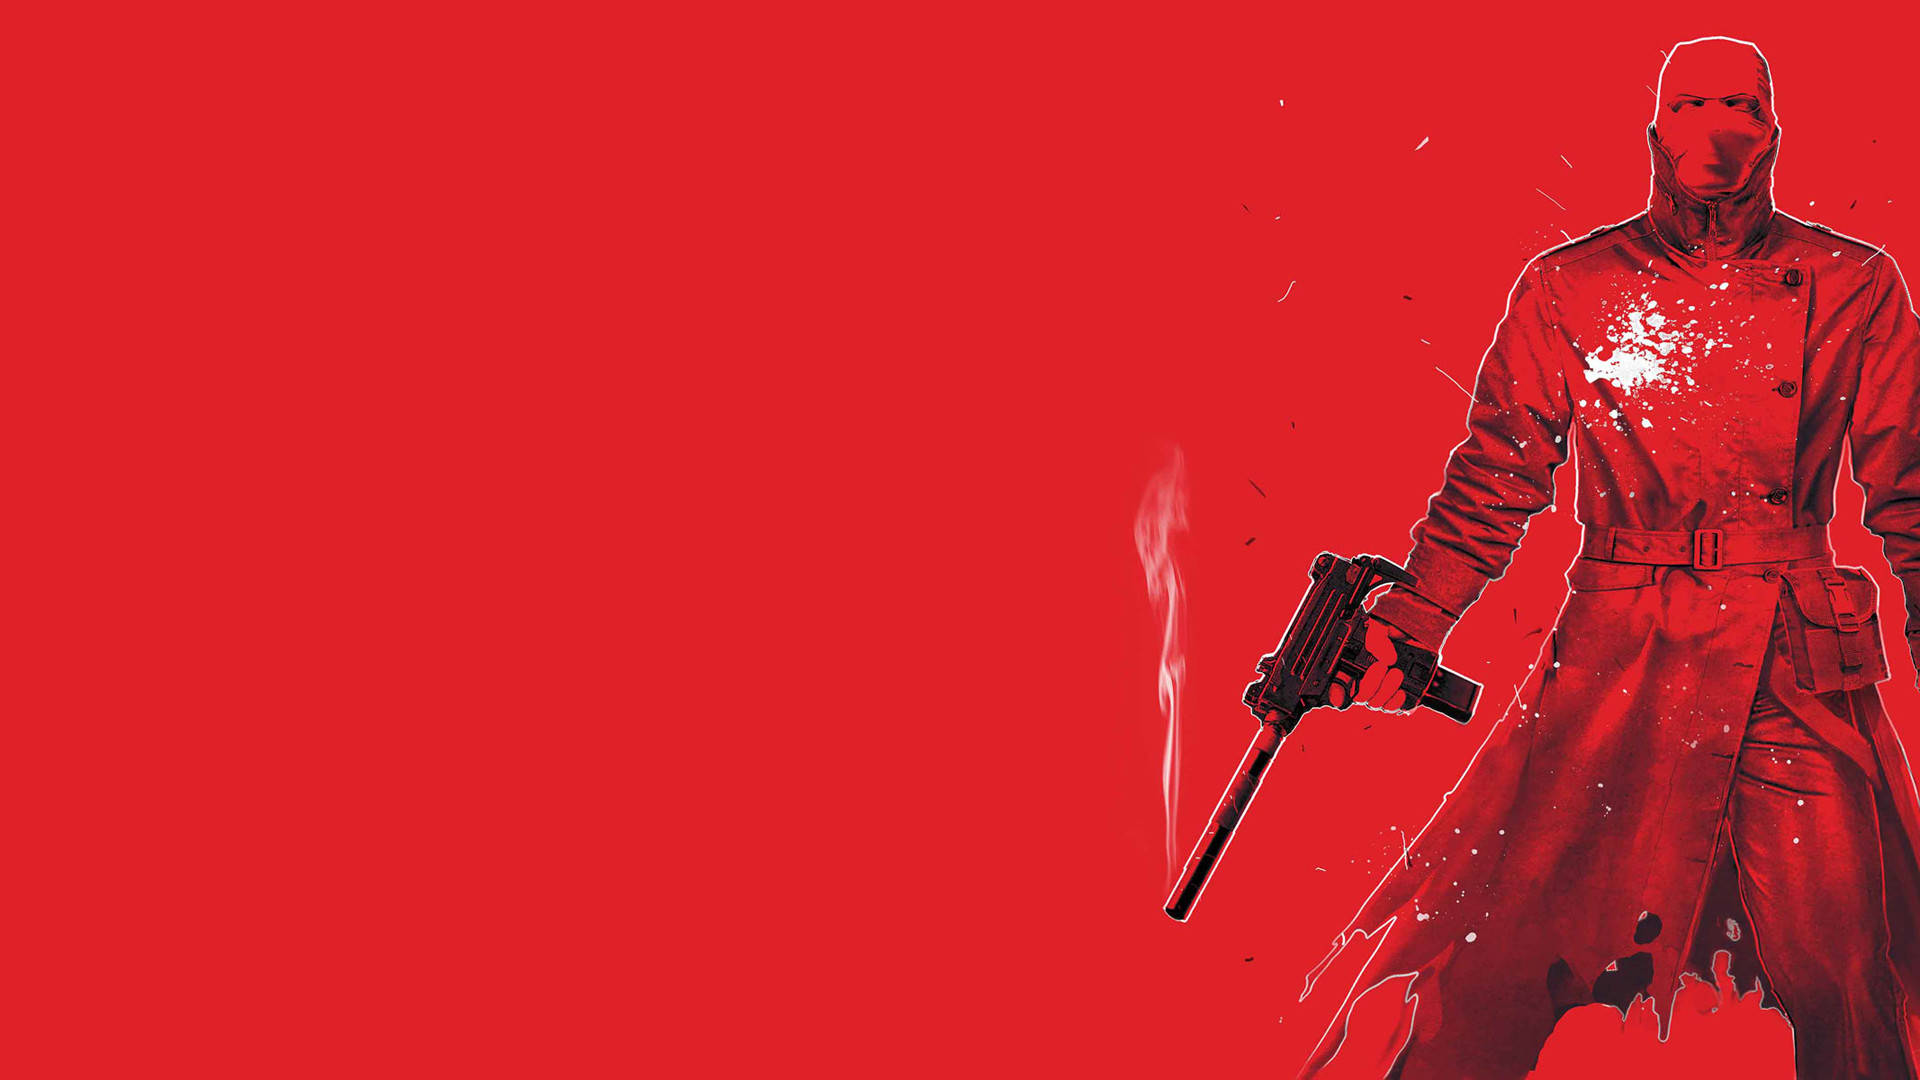 Red Hood Holding A Gun Background